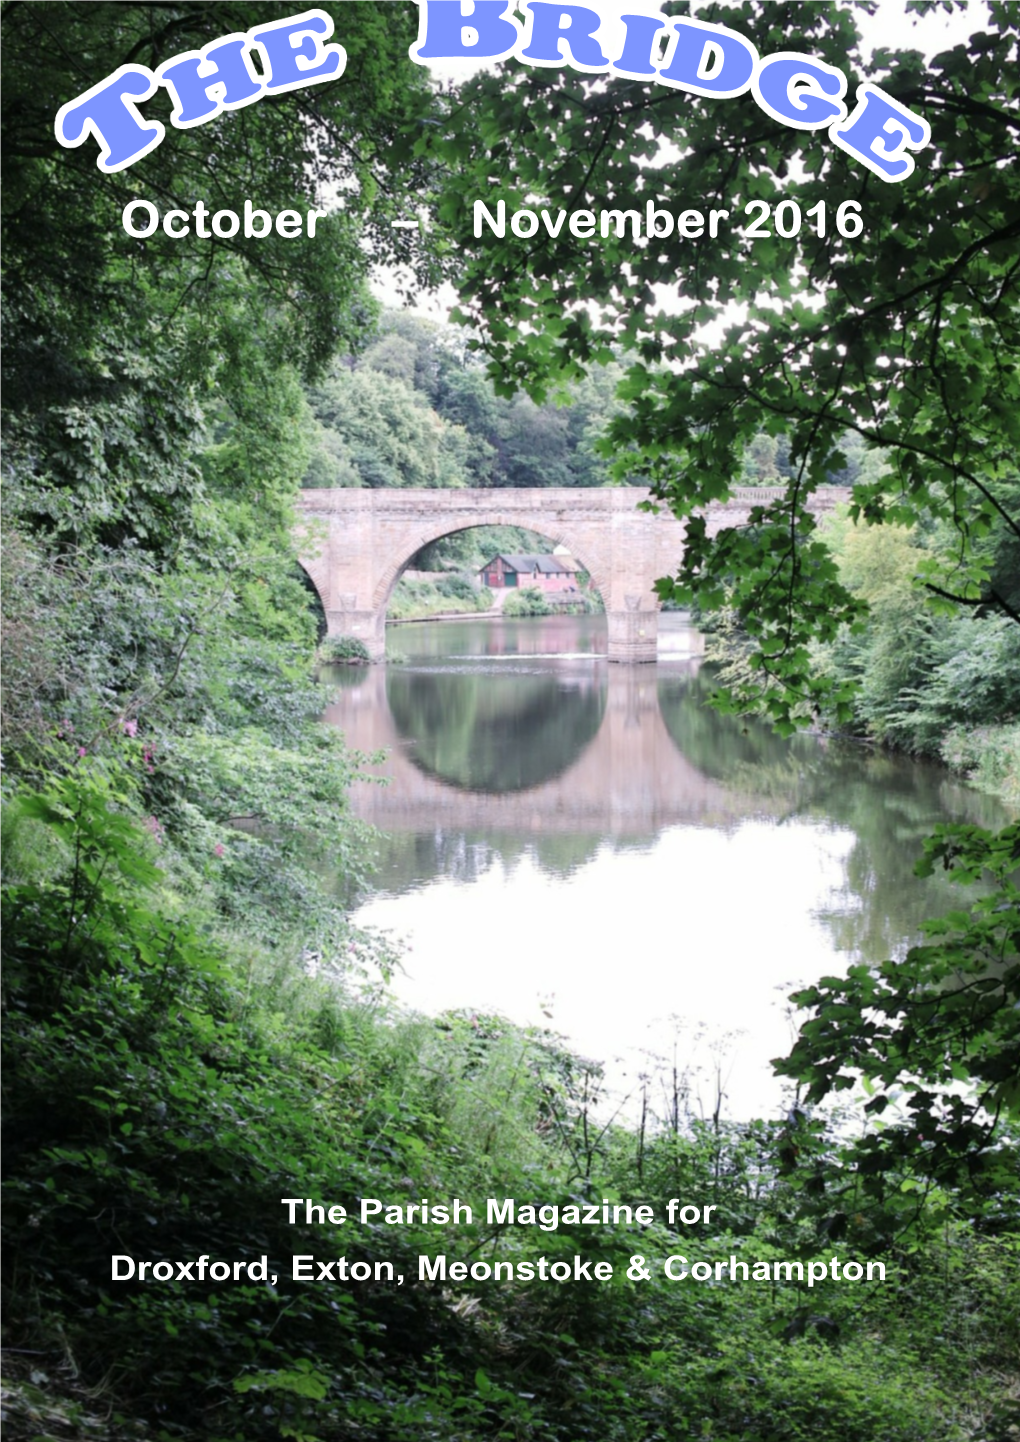 The Parish Magazine for Droxford, Exton, Meonstoke & Corhampton